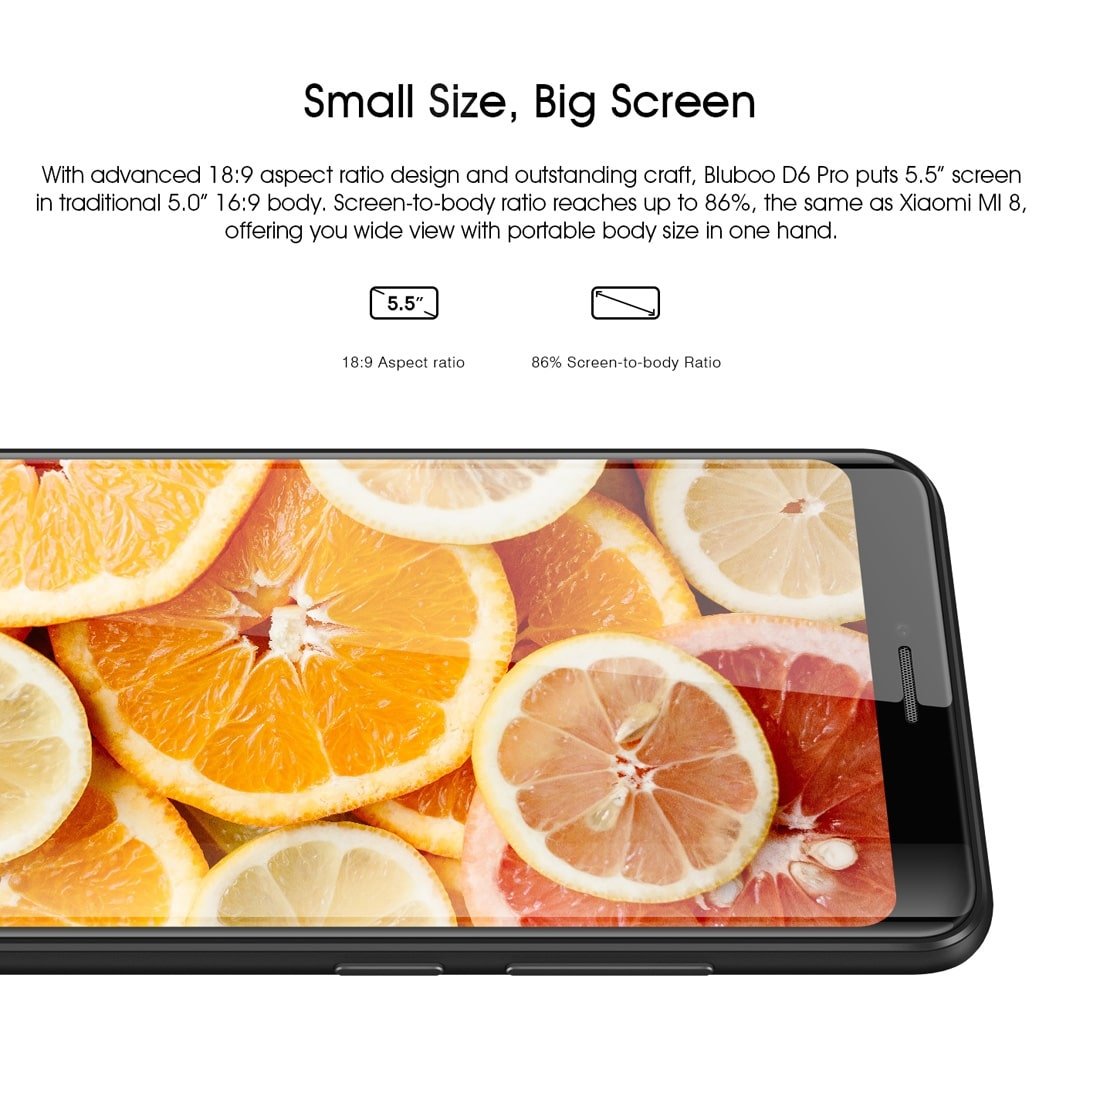 Bluboo D6 Pro Smartphone